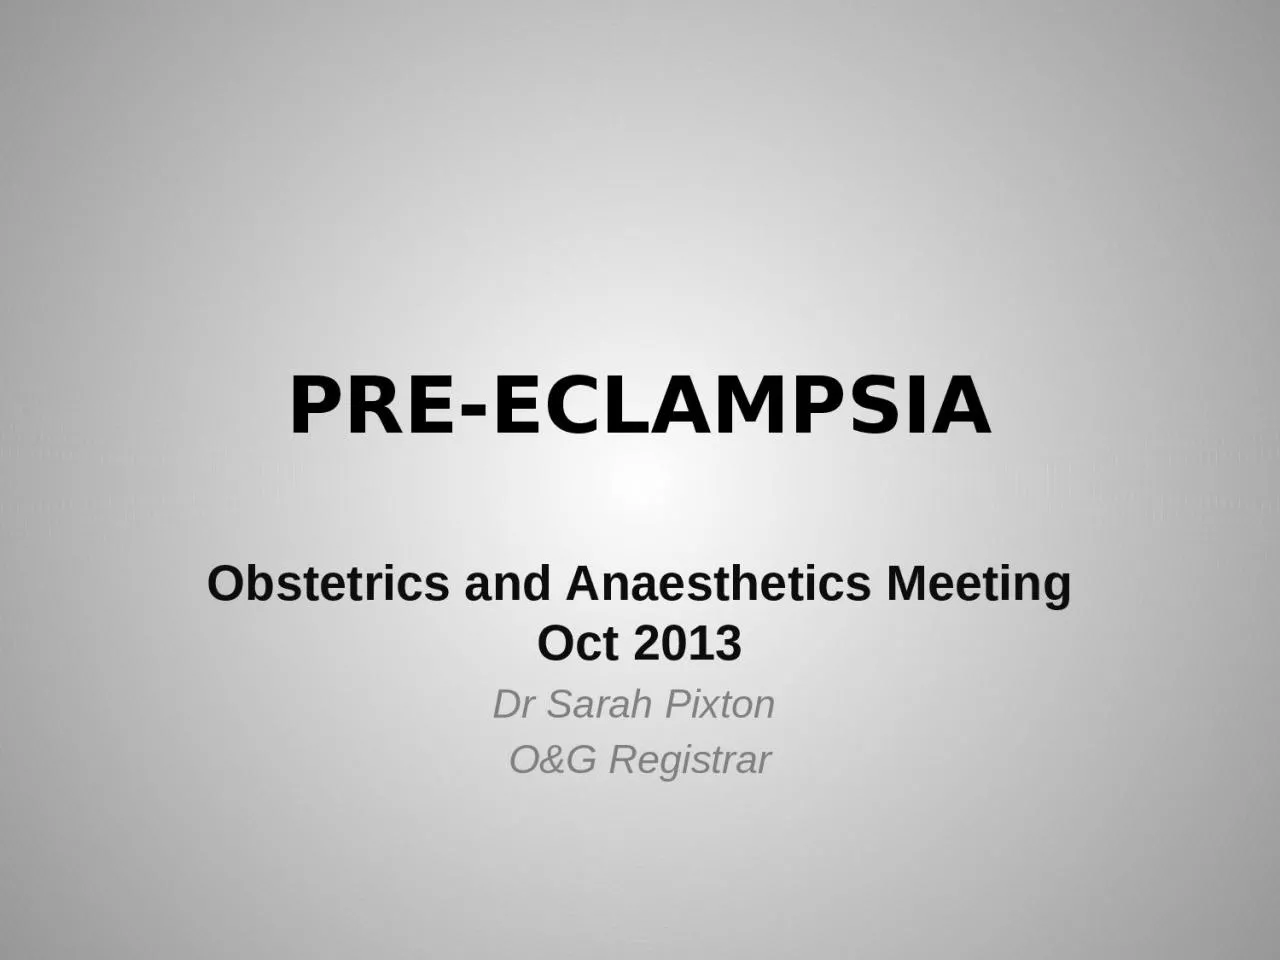 PRE-ECLAMPSIA Obstetrics and